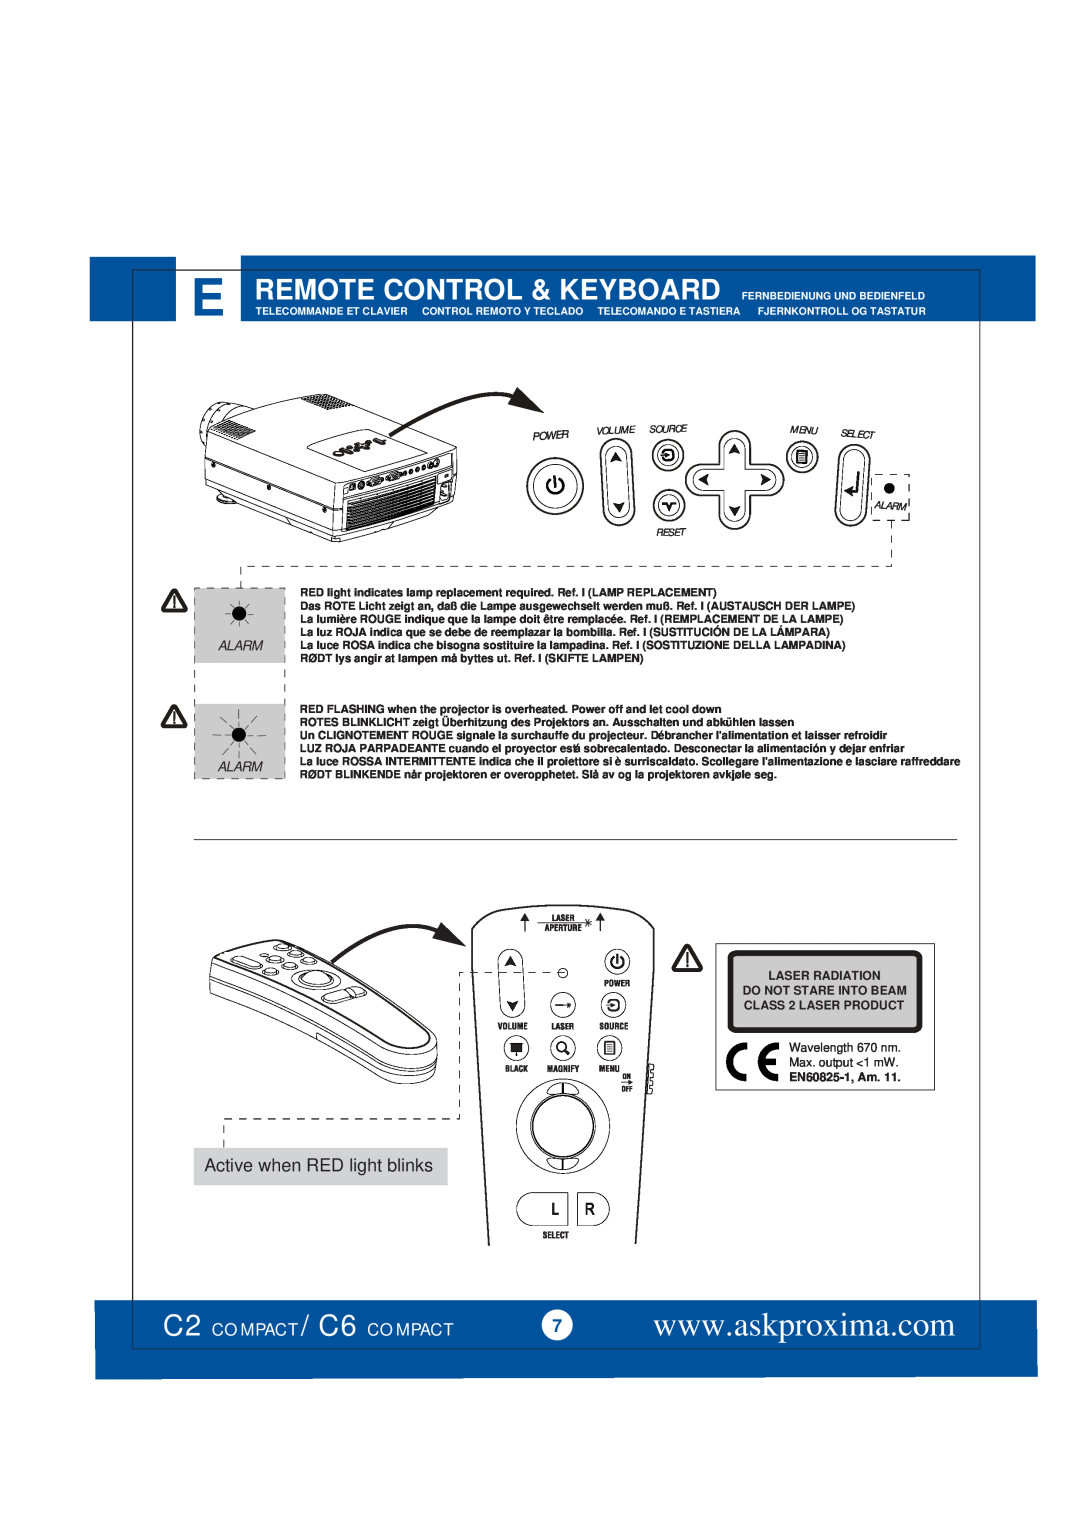 Ask Proxima C2 COMPACT / C6 COMPACT, Alarm, Power, Remote Control & Keyboard Fernbedienung Und Bedienfeld, Volume, Menu 